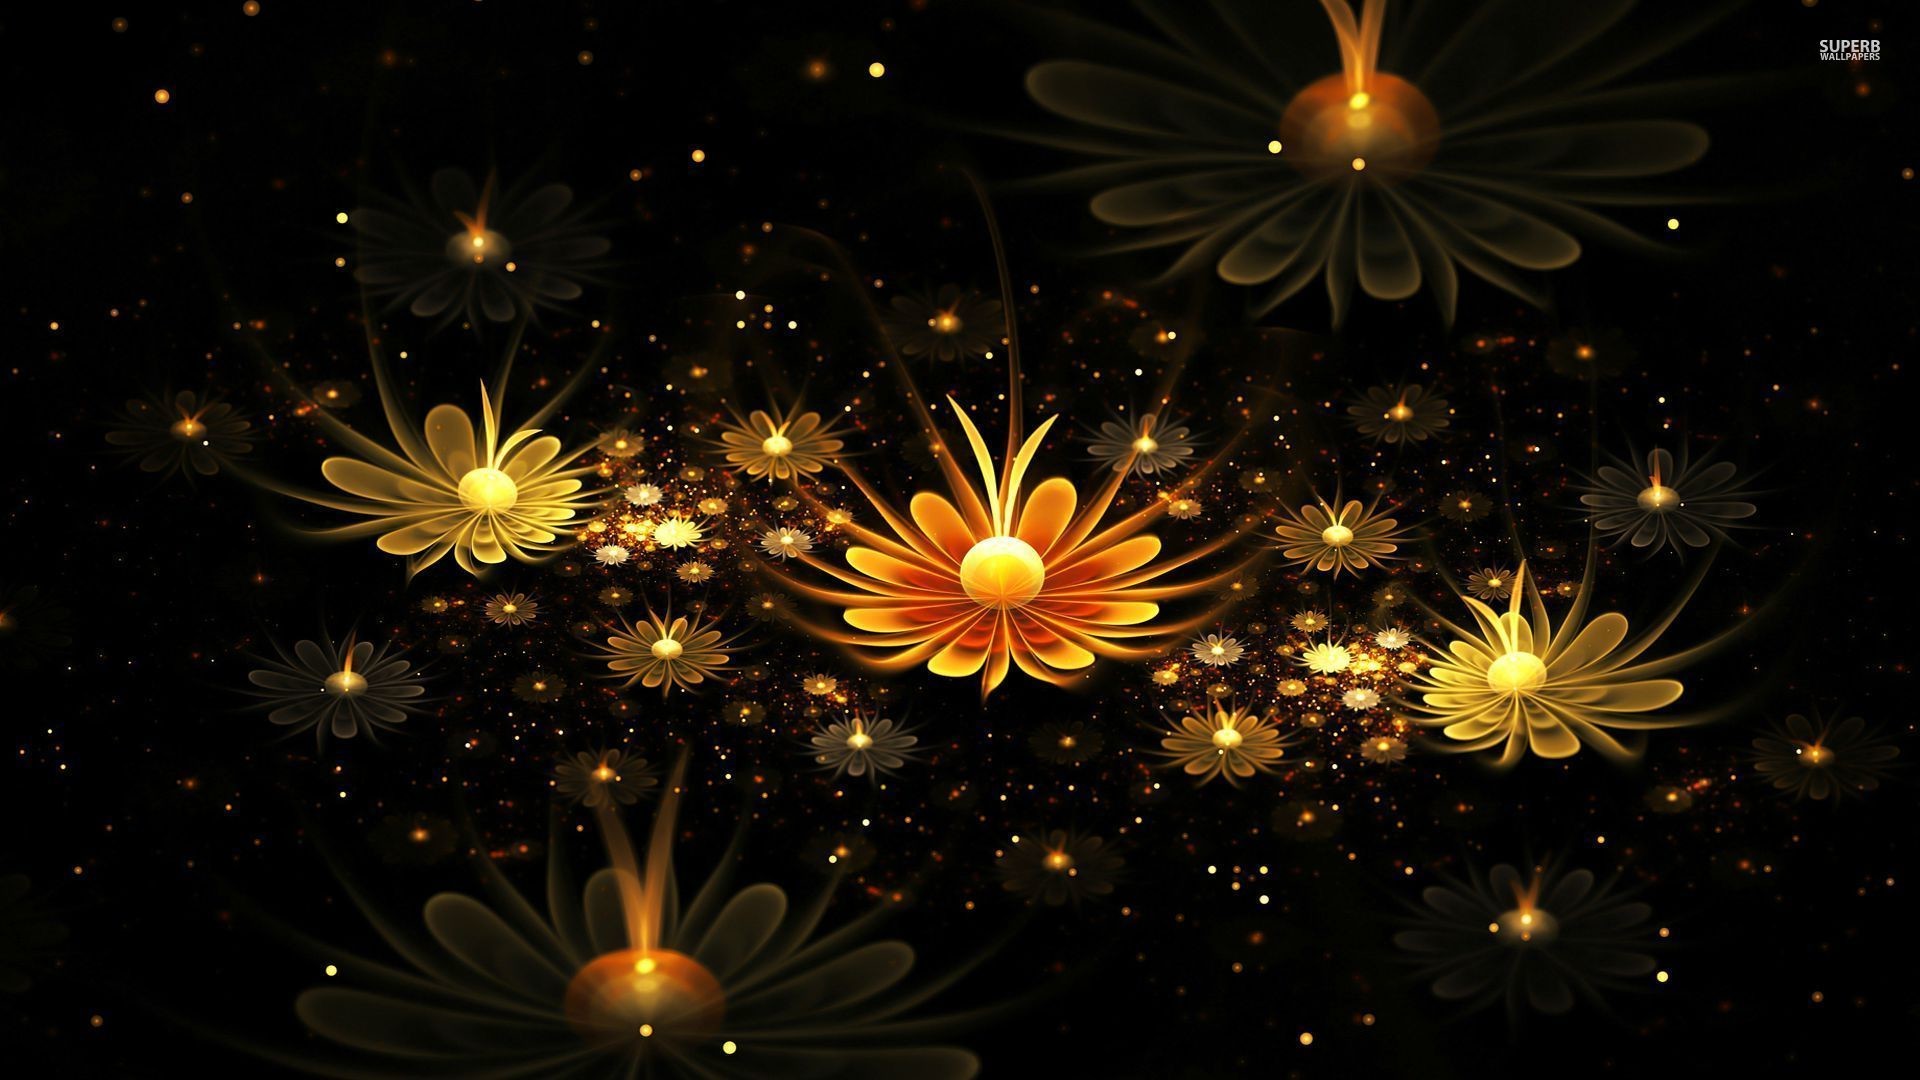 Fractal glowing daisies download 3d desktop wallpapers